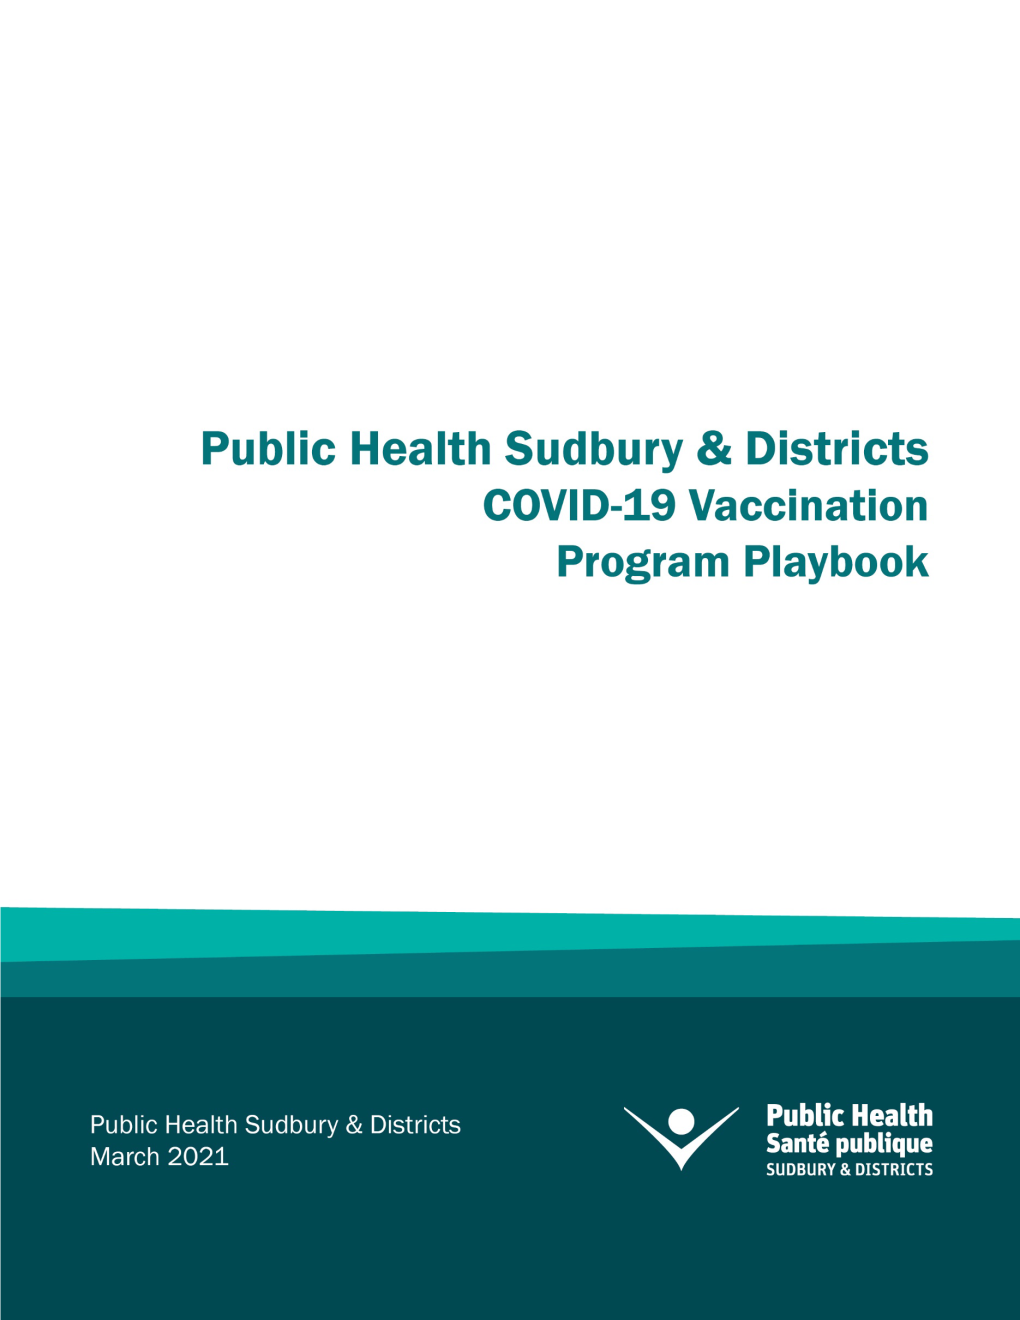 COVID-19 Vaccination Program Playbook